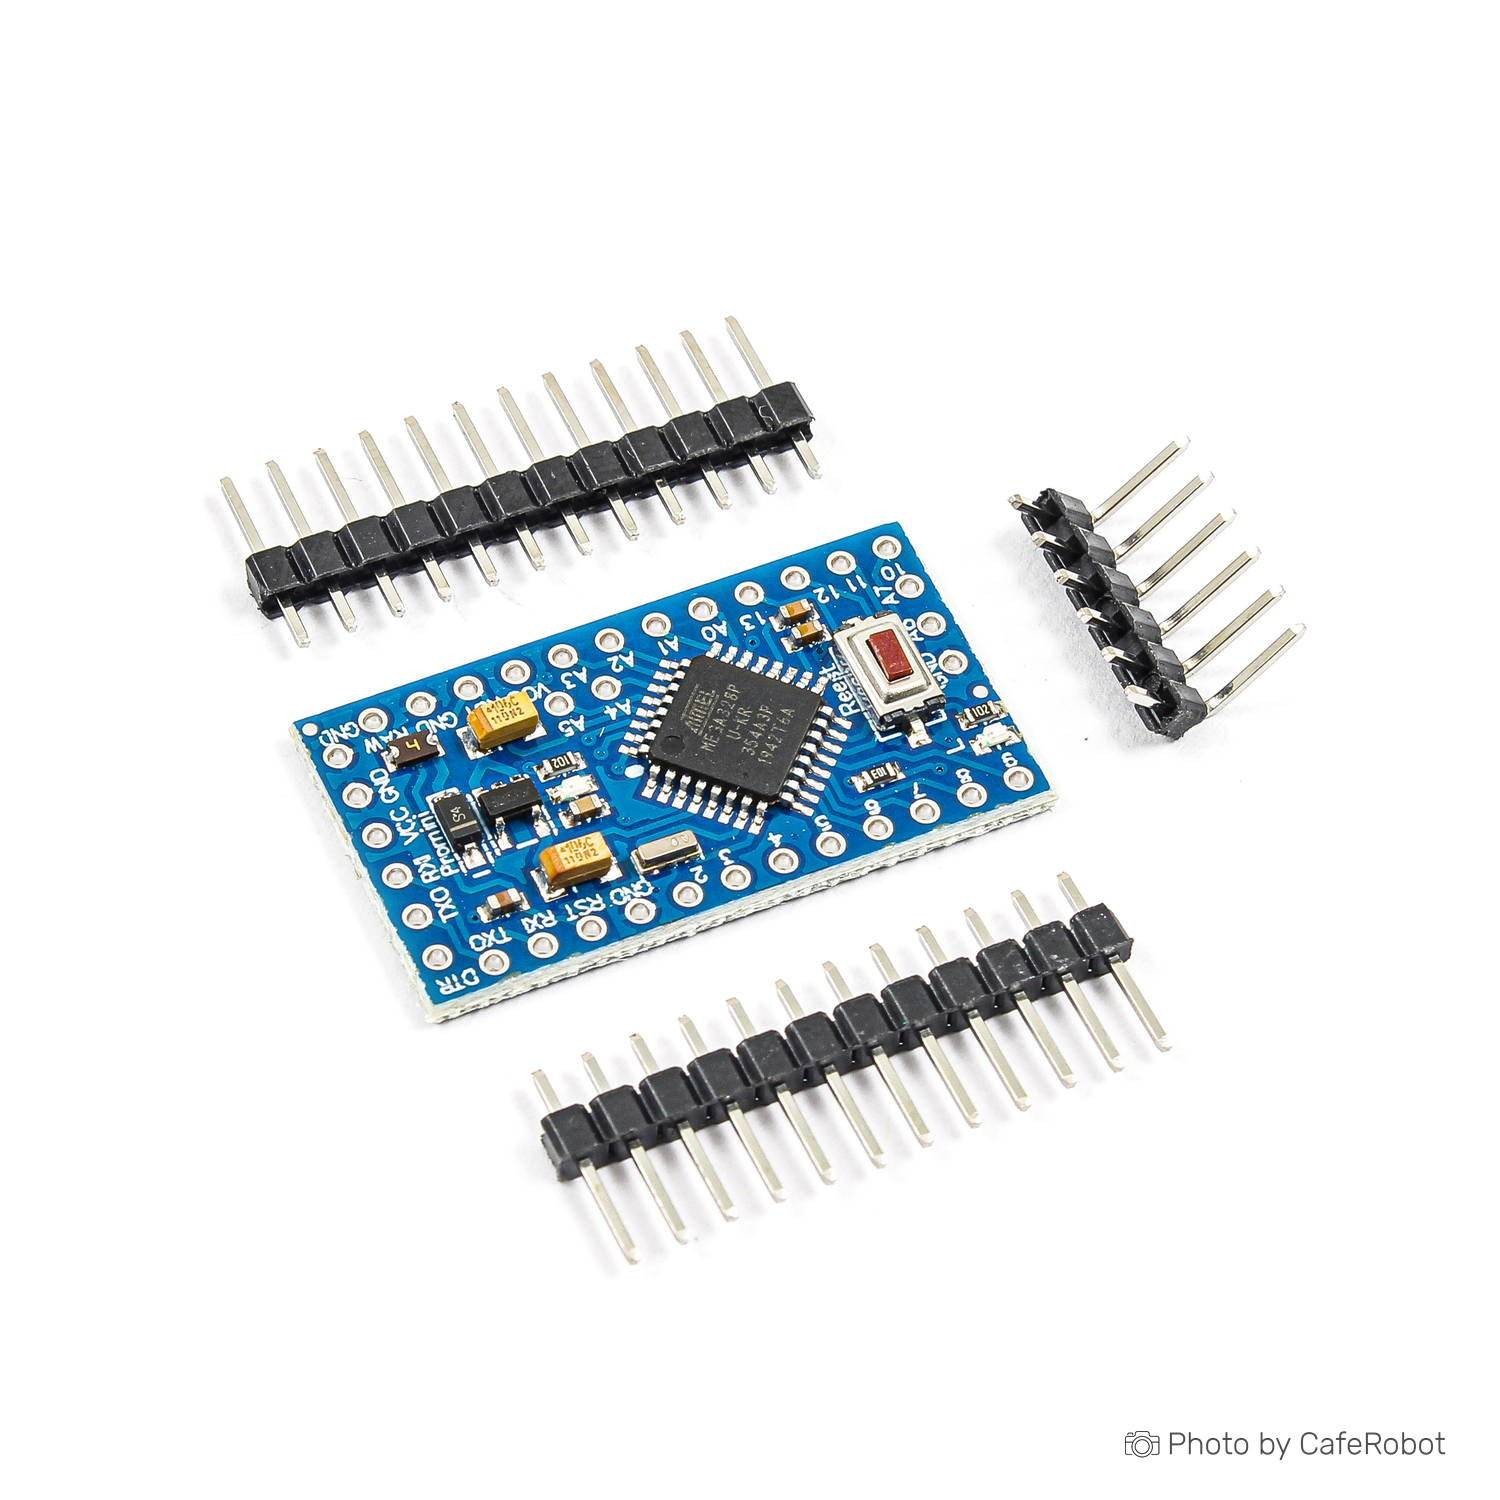 Arduino Pro Micro (Clone) - ElectroPeak